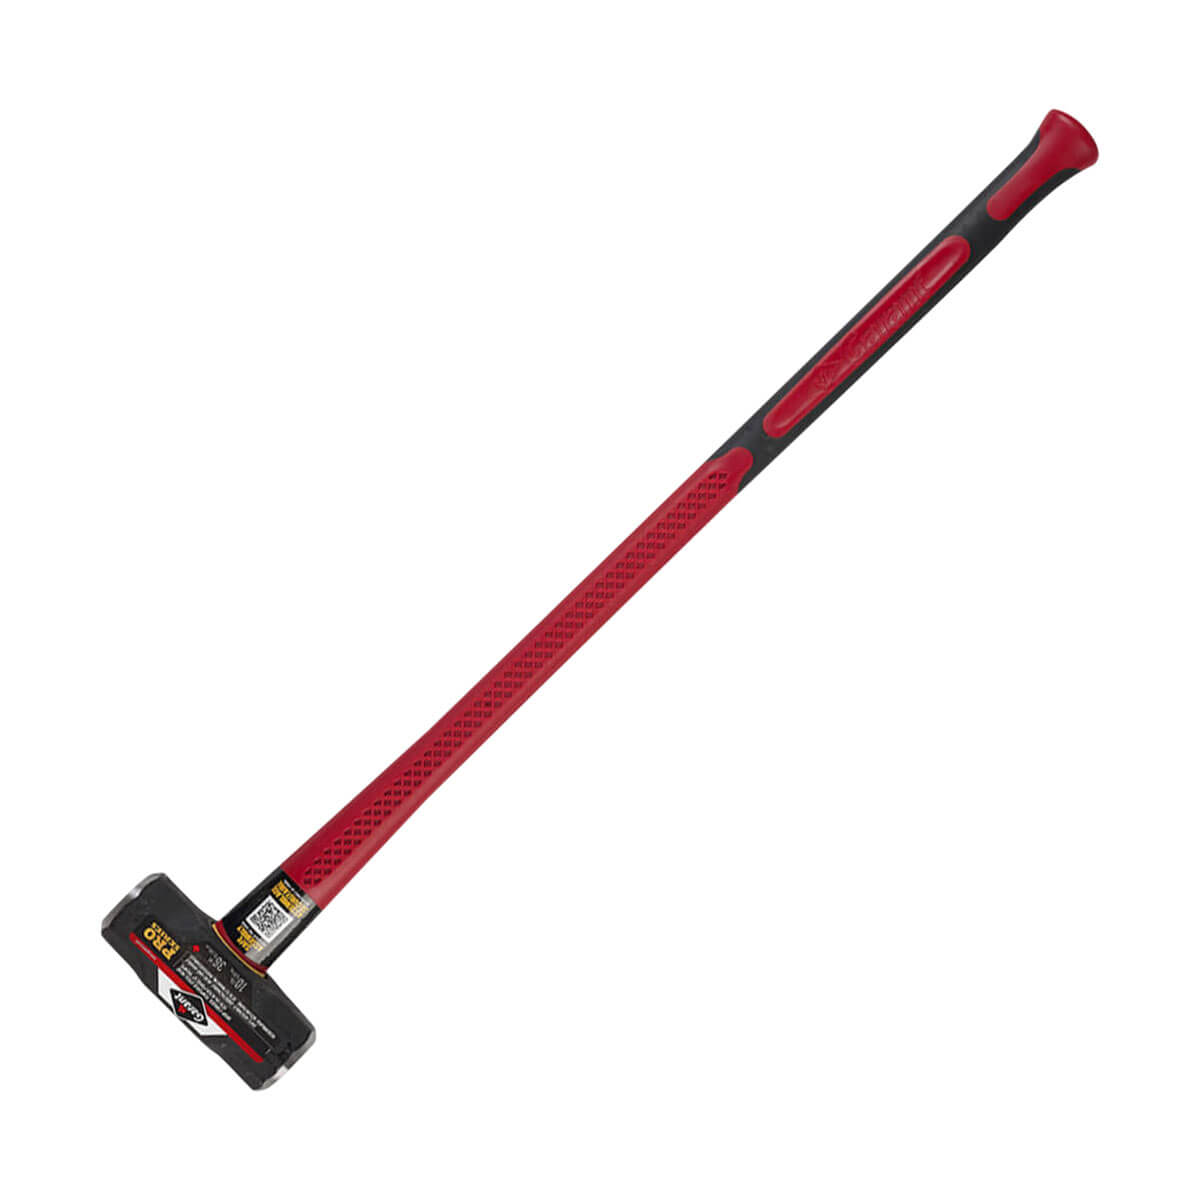 Sledge Hammer - 32-in - 8 lb